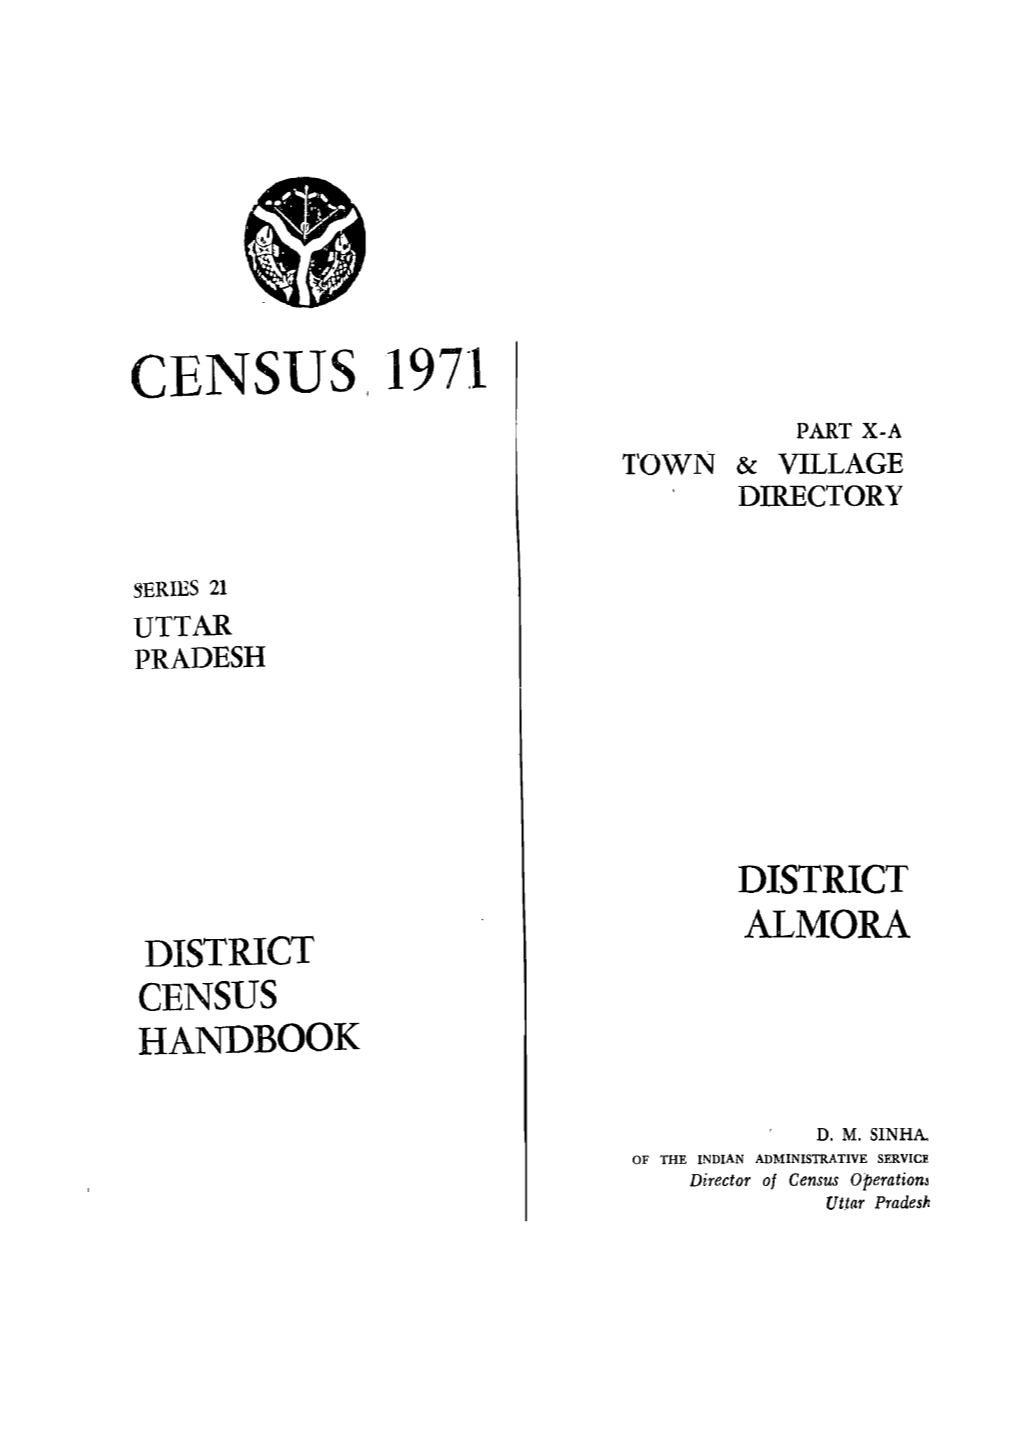 District Census Handbook, Almora, Part X-A , Series-21, Uttar Pradesh